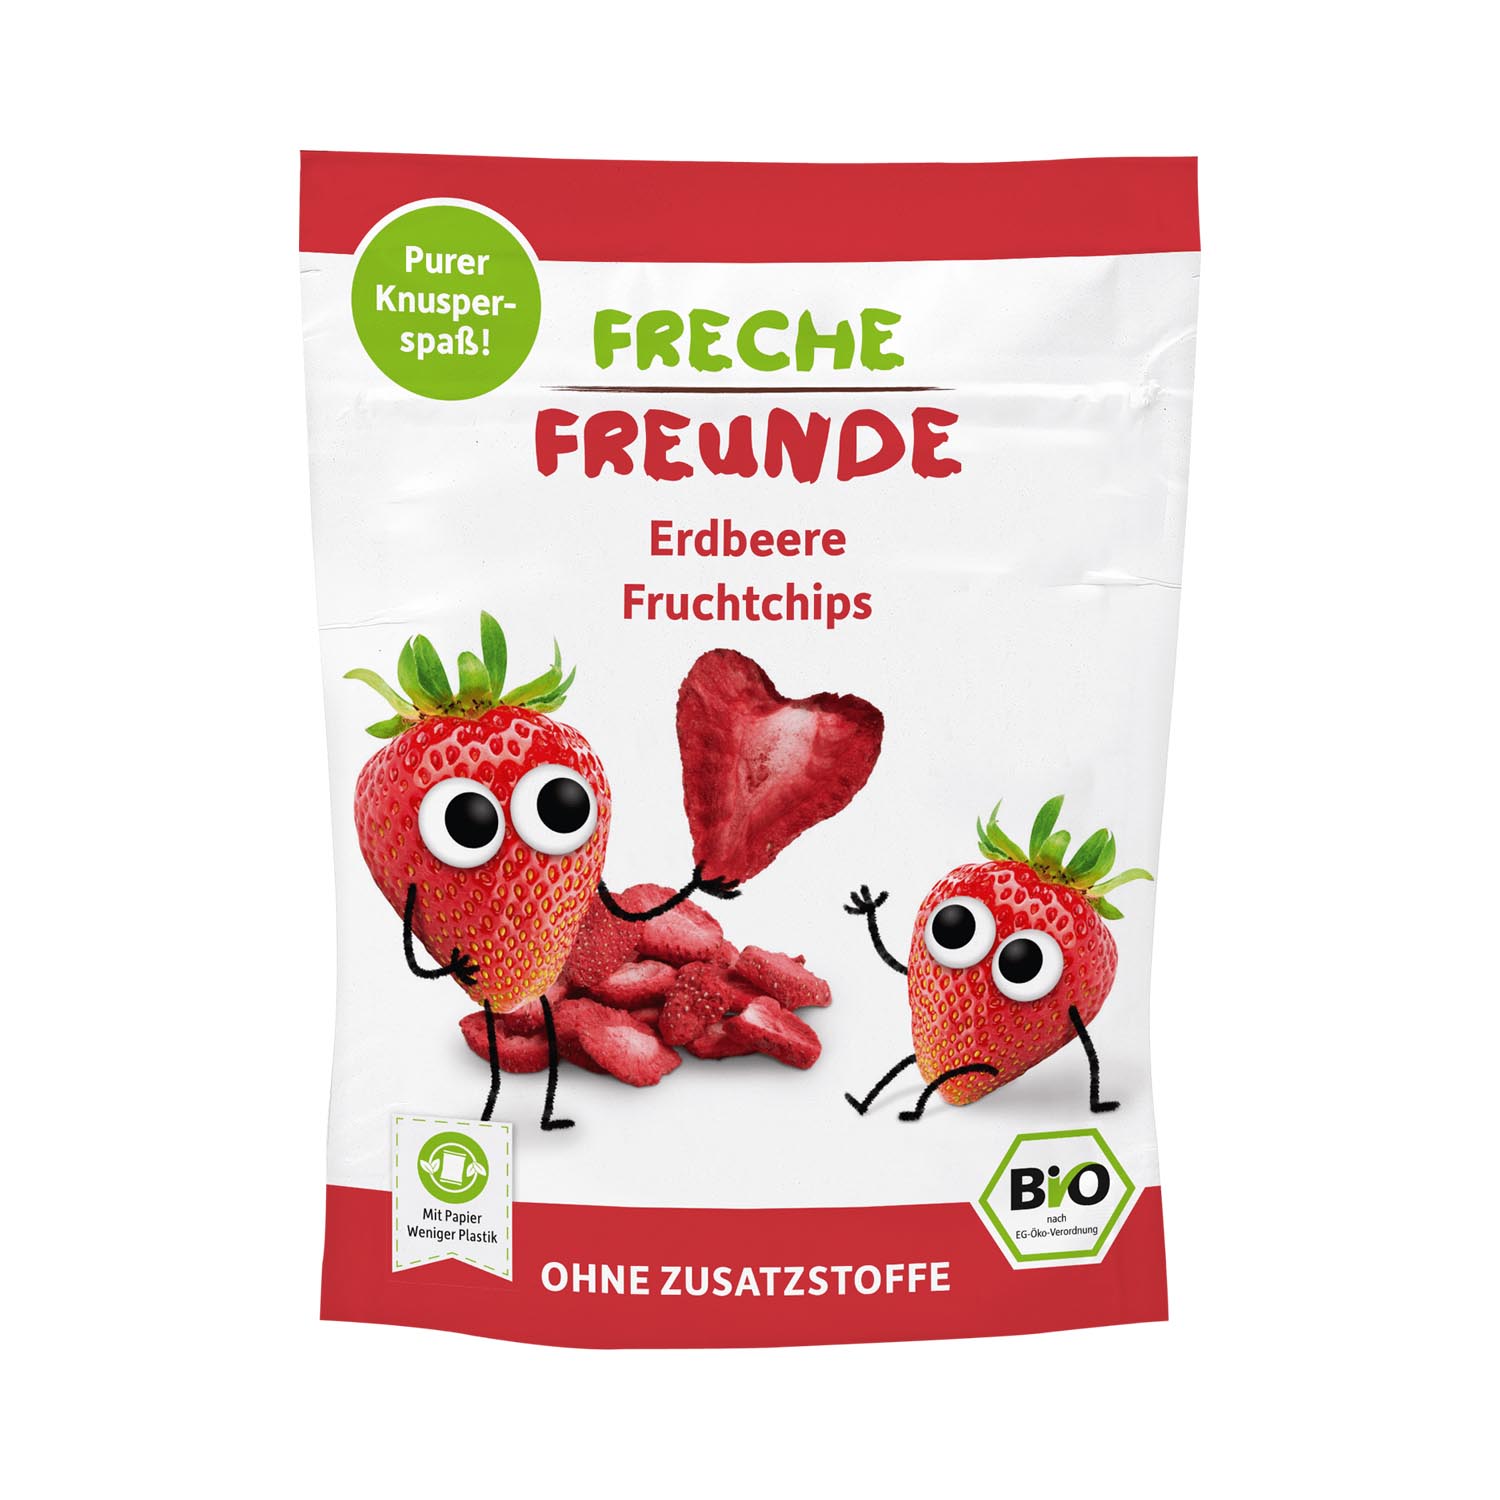 https://frechefreunde.ch/wp-content/uploads/2022/09/Freche-Freunde-4260249140530_Fruchtchips_Erdbeere-7.jpg